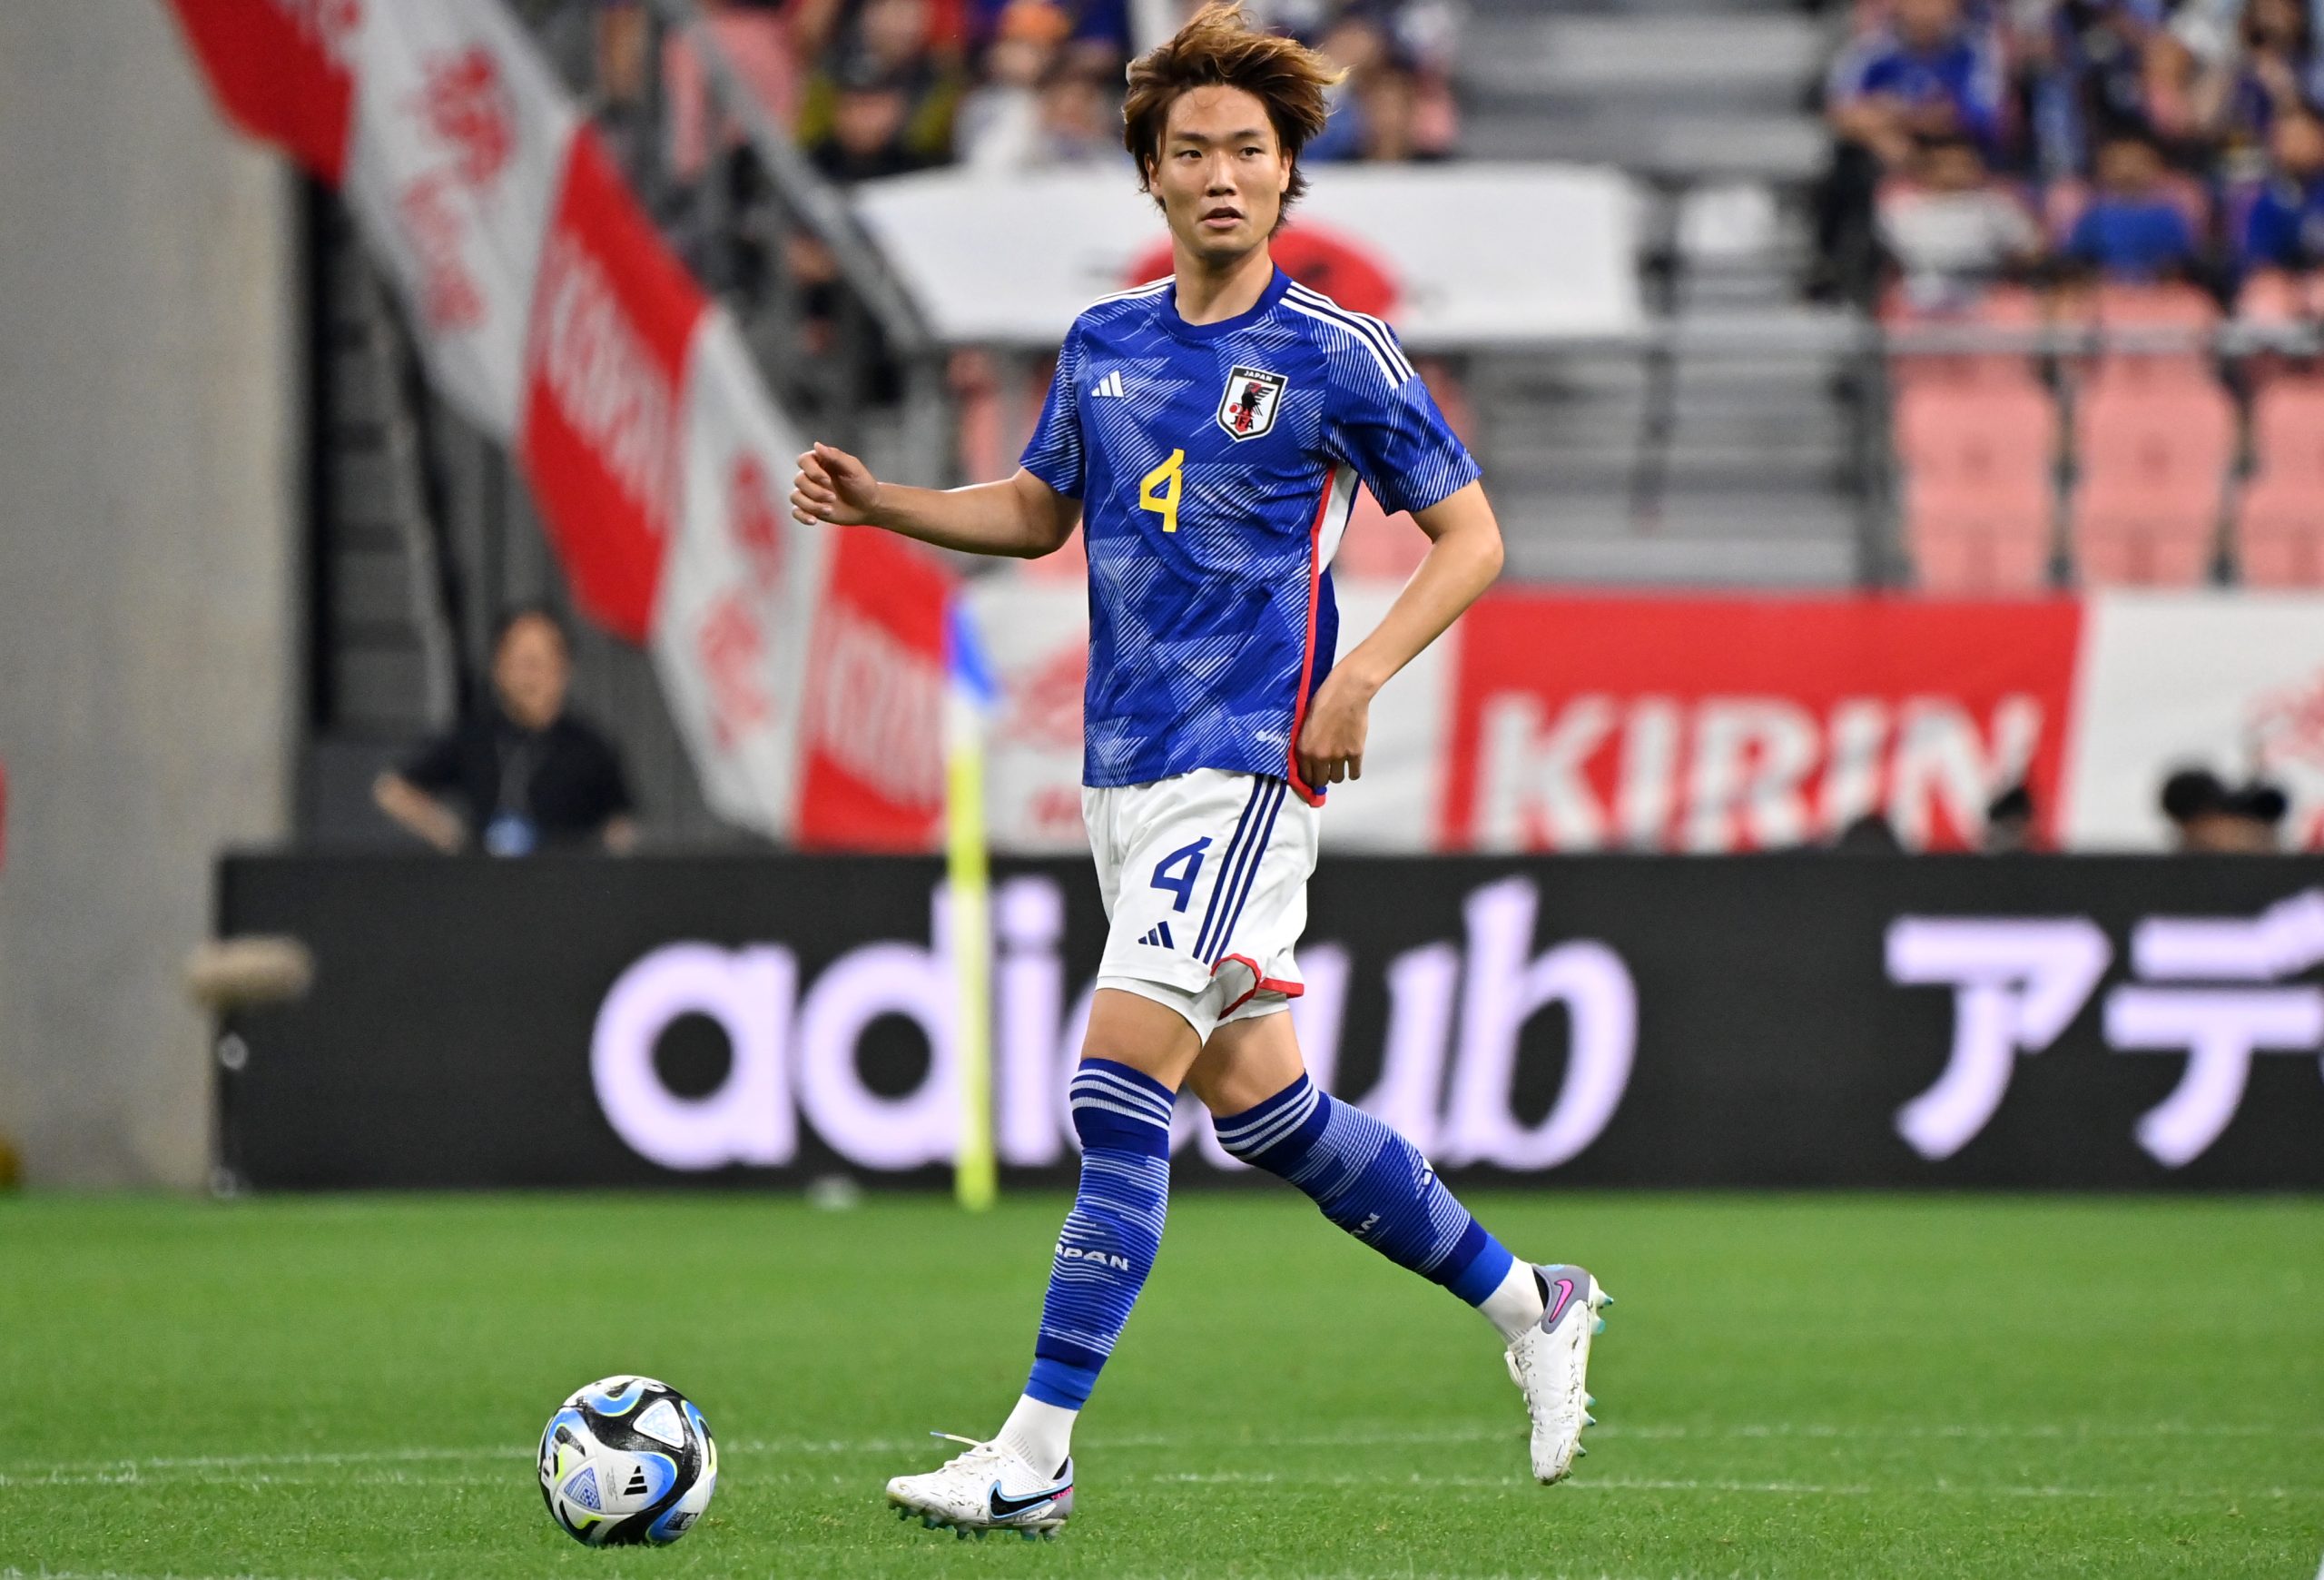 Japanese centre-back Ko Itakura of Borussia Monchengladbach is a recurring name on the Liverpool transfer radar.